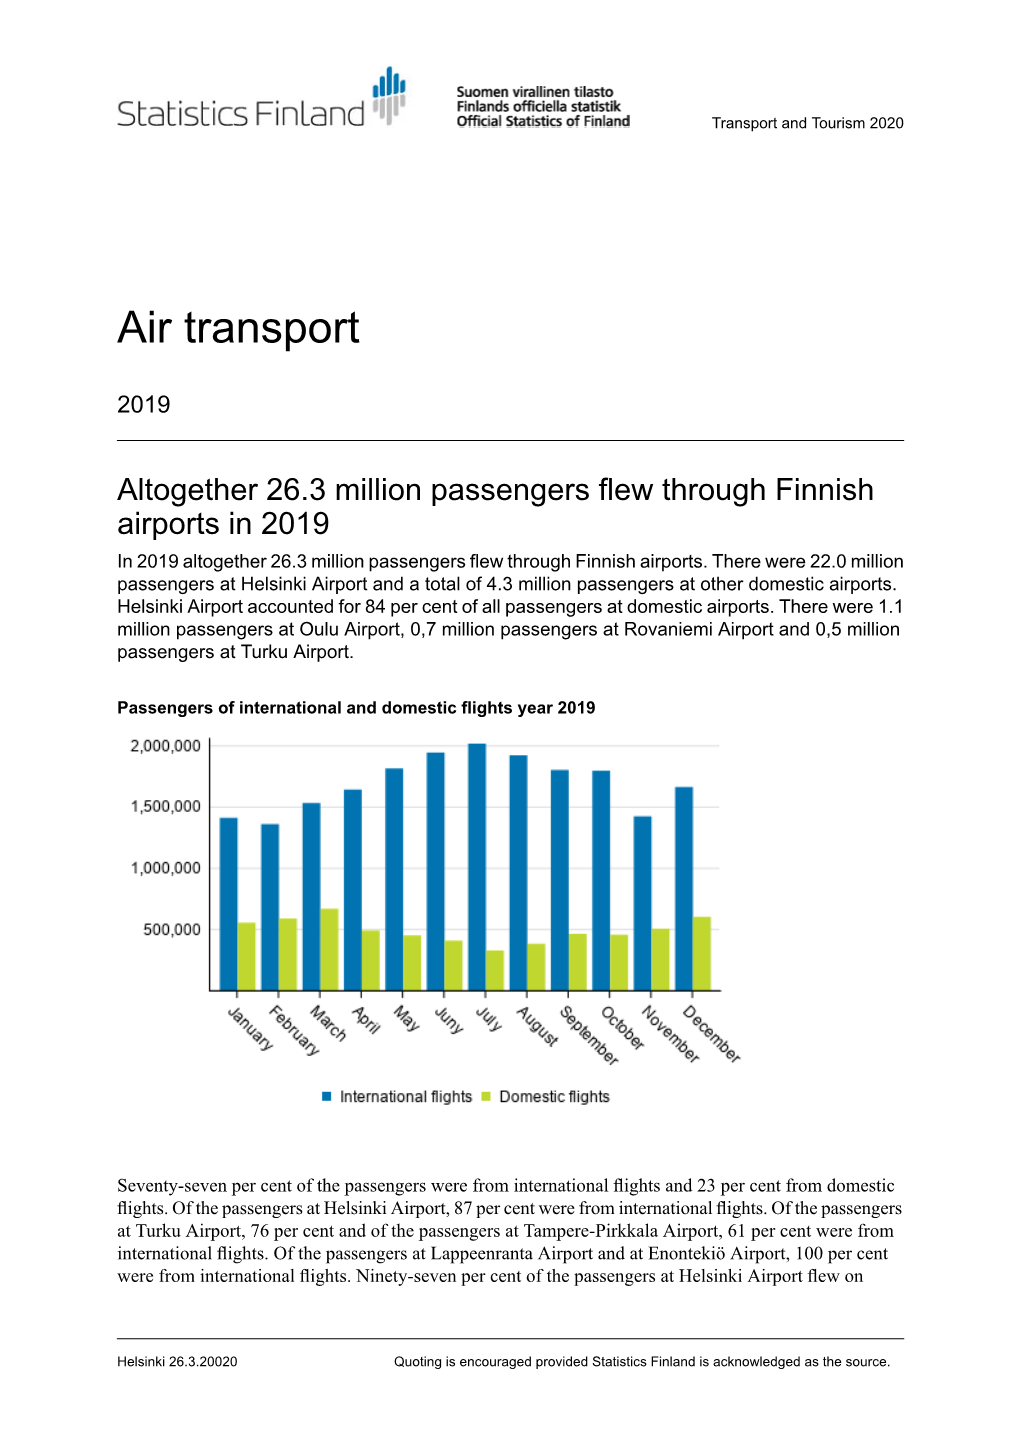 Air Transport 2019